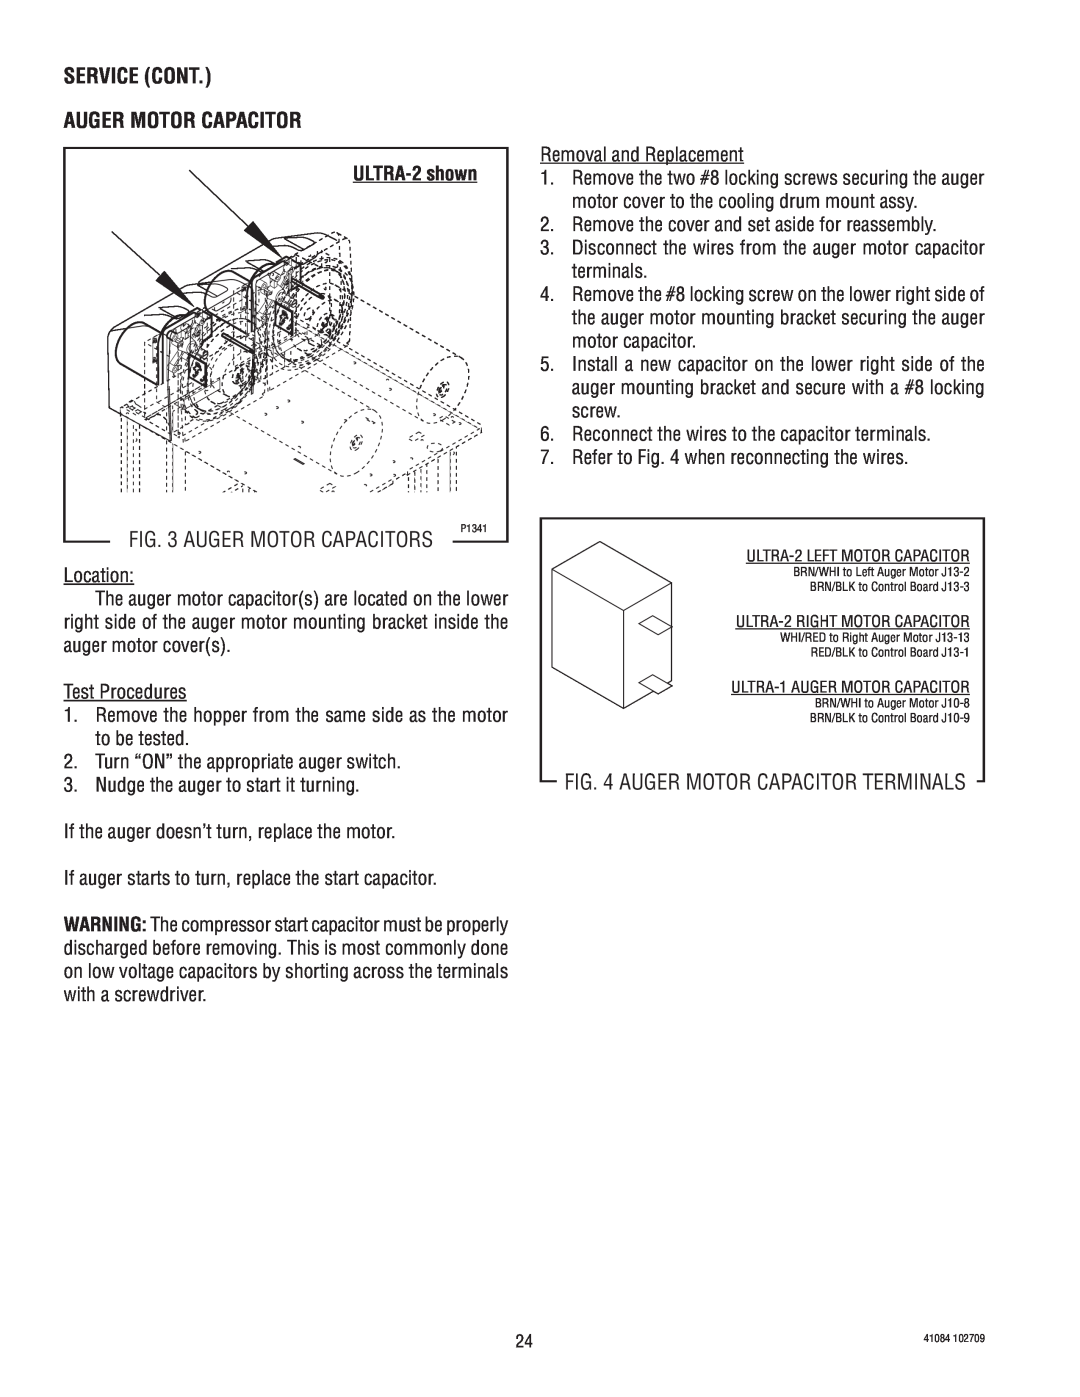 Bunn ULTRA-1 manual SERVICE cont AUGER MOTOR CAPACITOR, Auger Motor Capacitor Terminals 